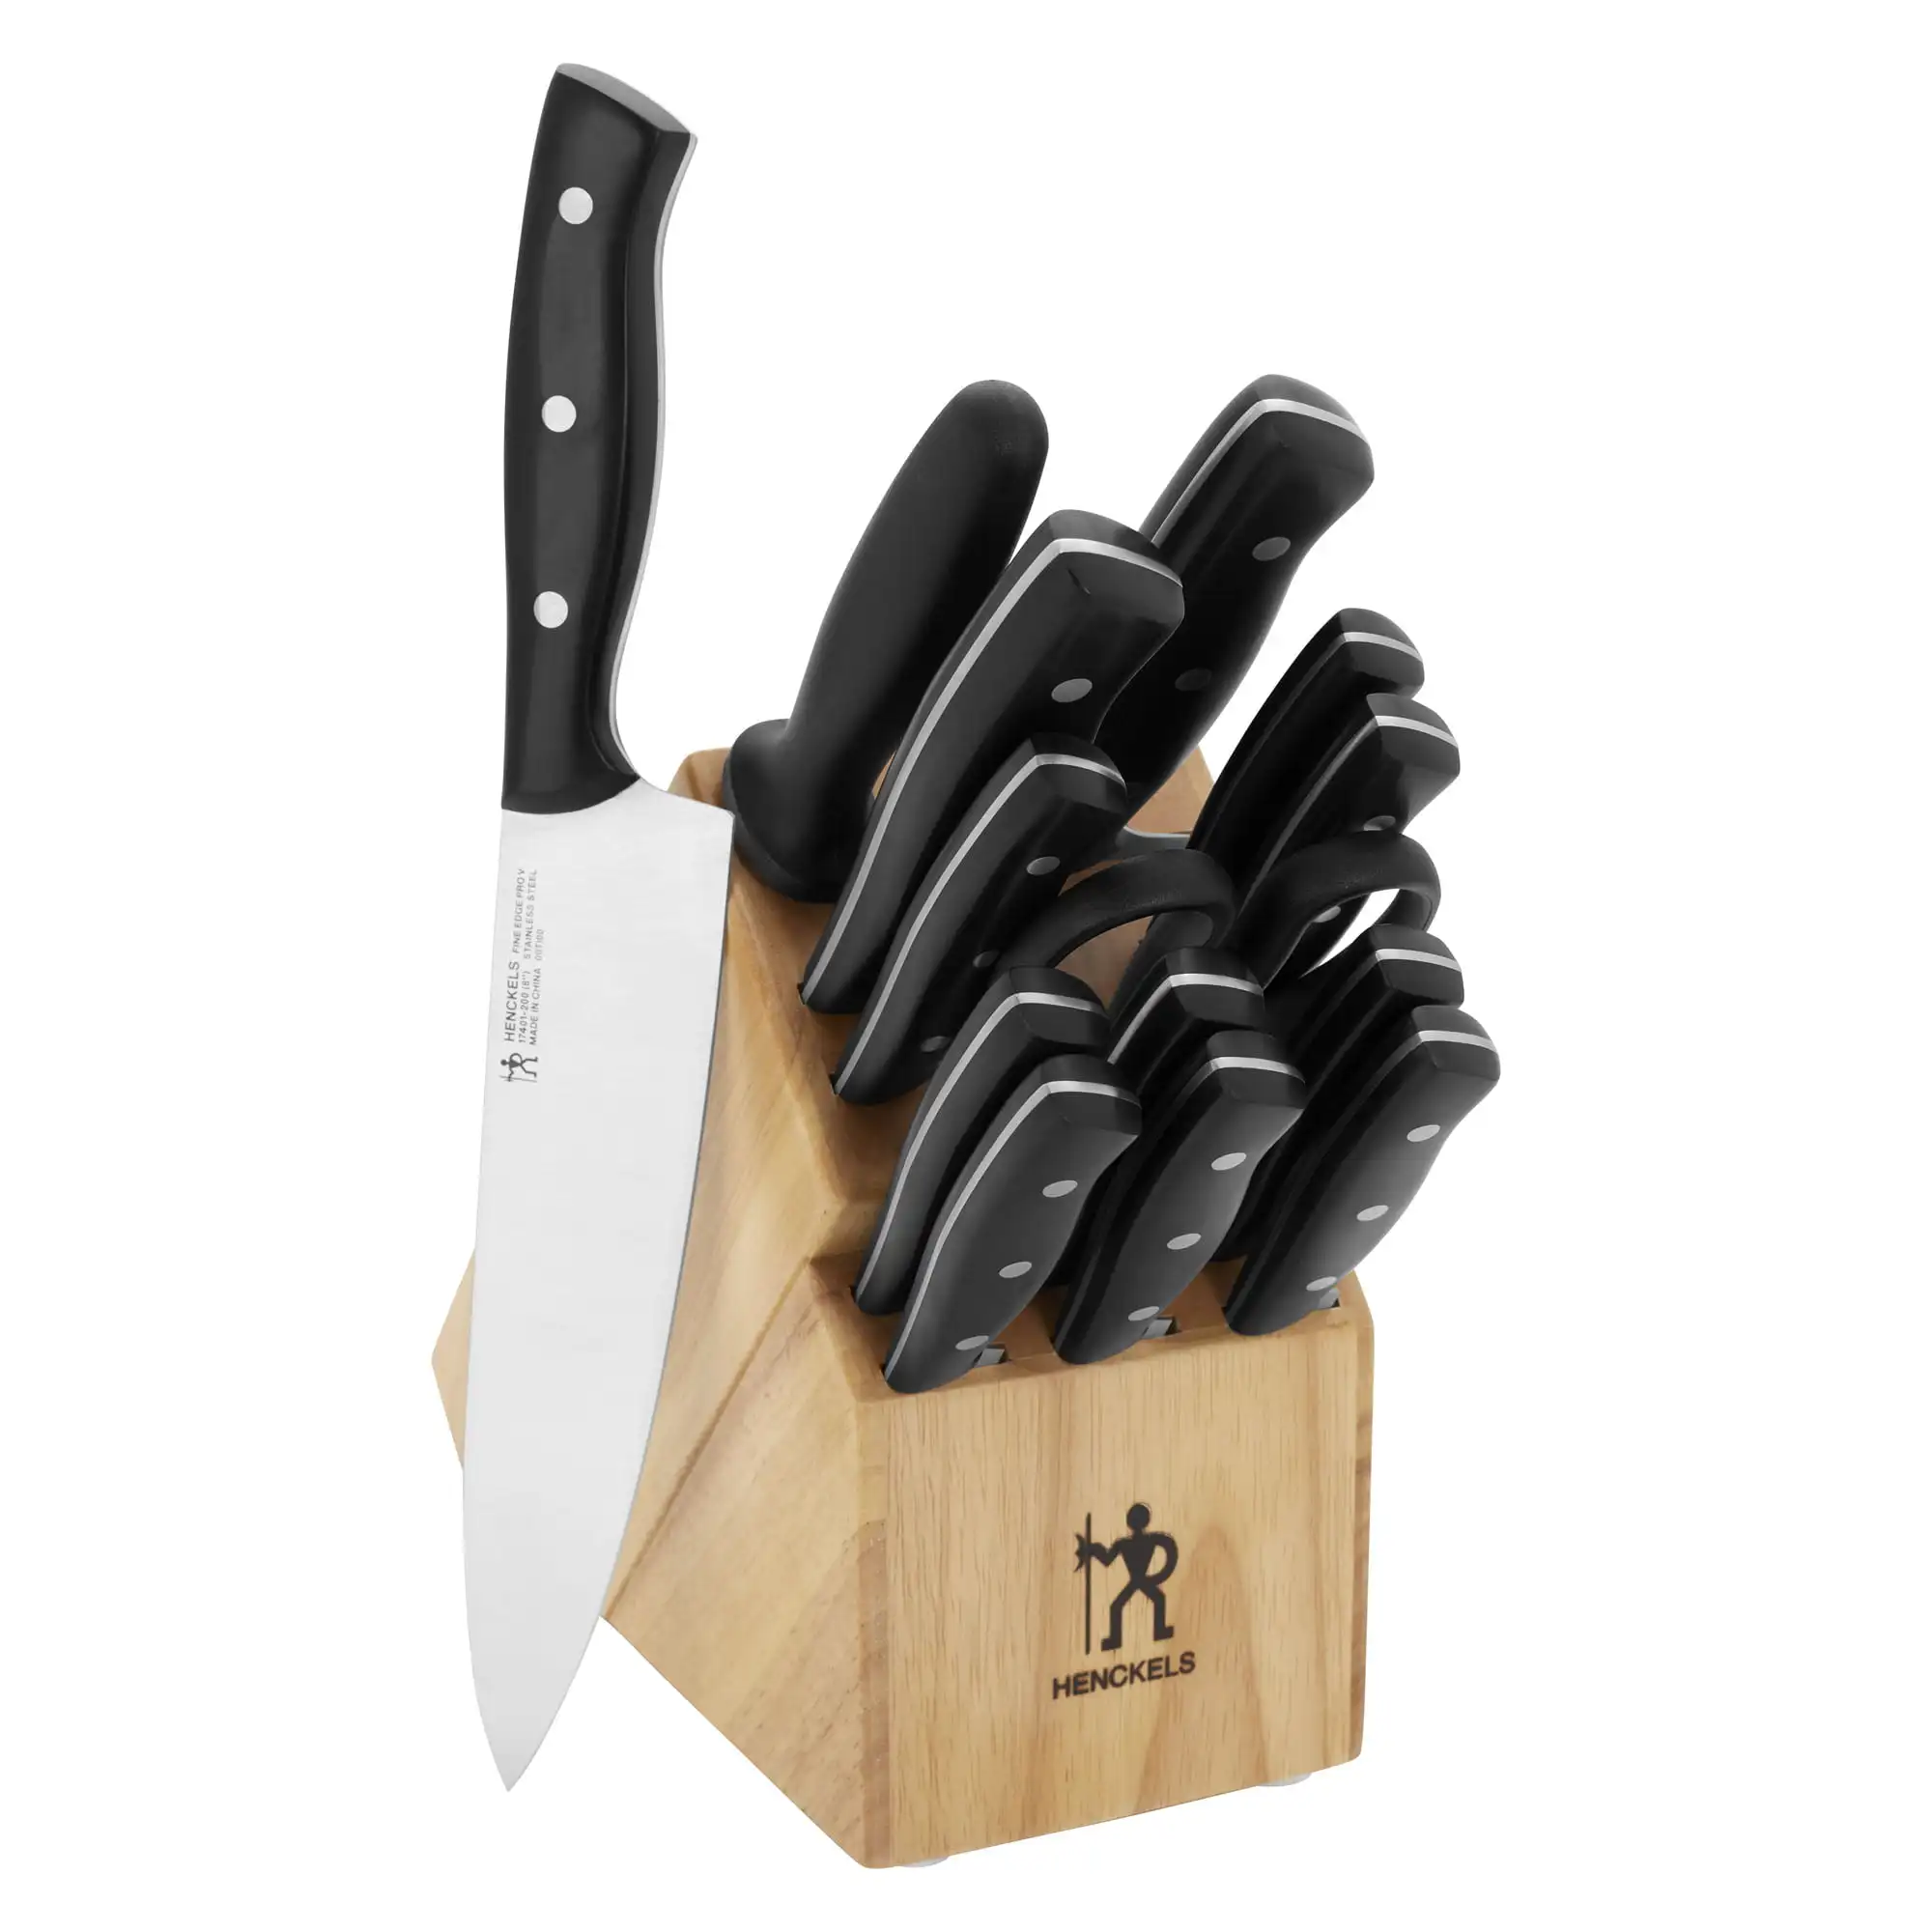 

Henckels Everpoint 15 PC Triple Rivet Stainless Steel Knife Block Setkitchen knives set , Knife holder